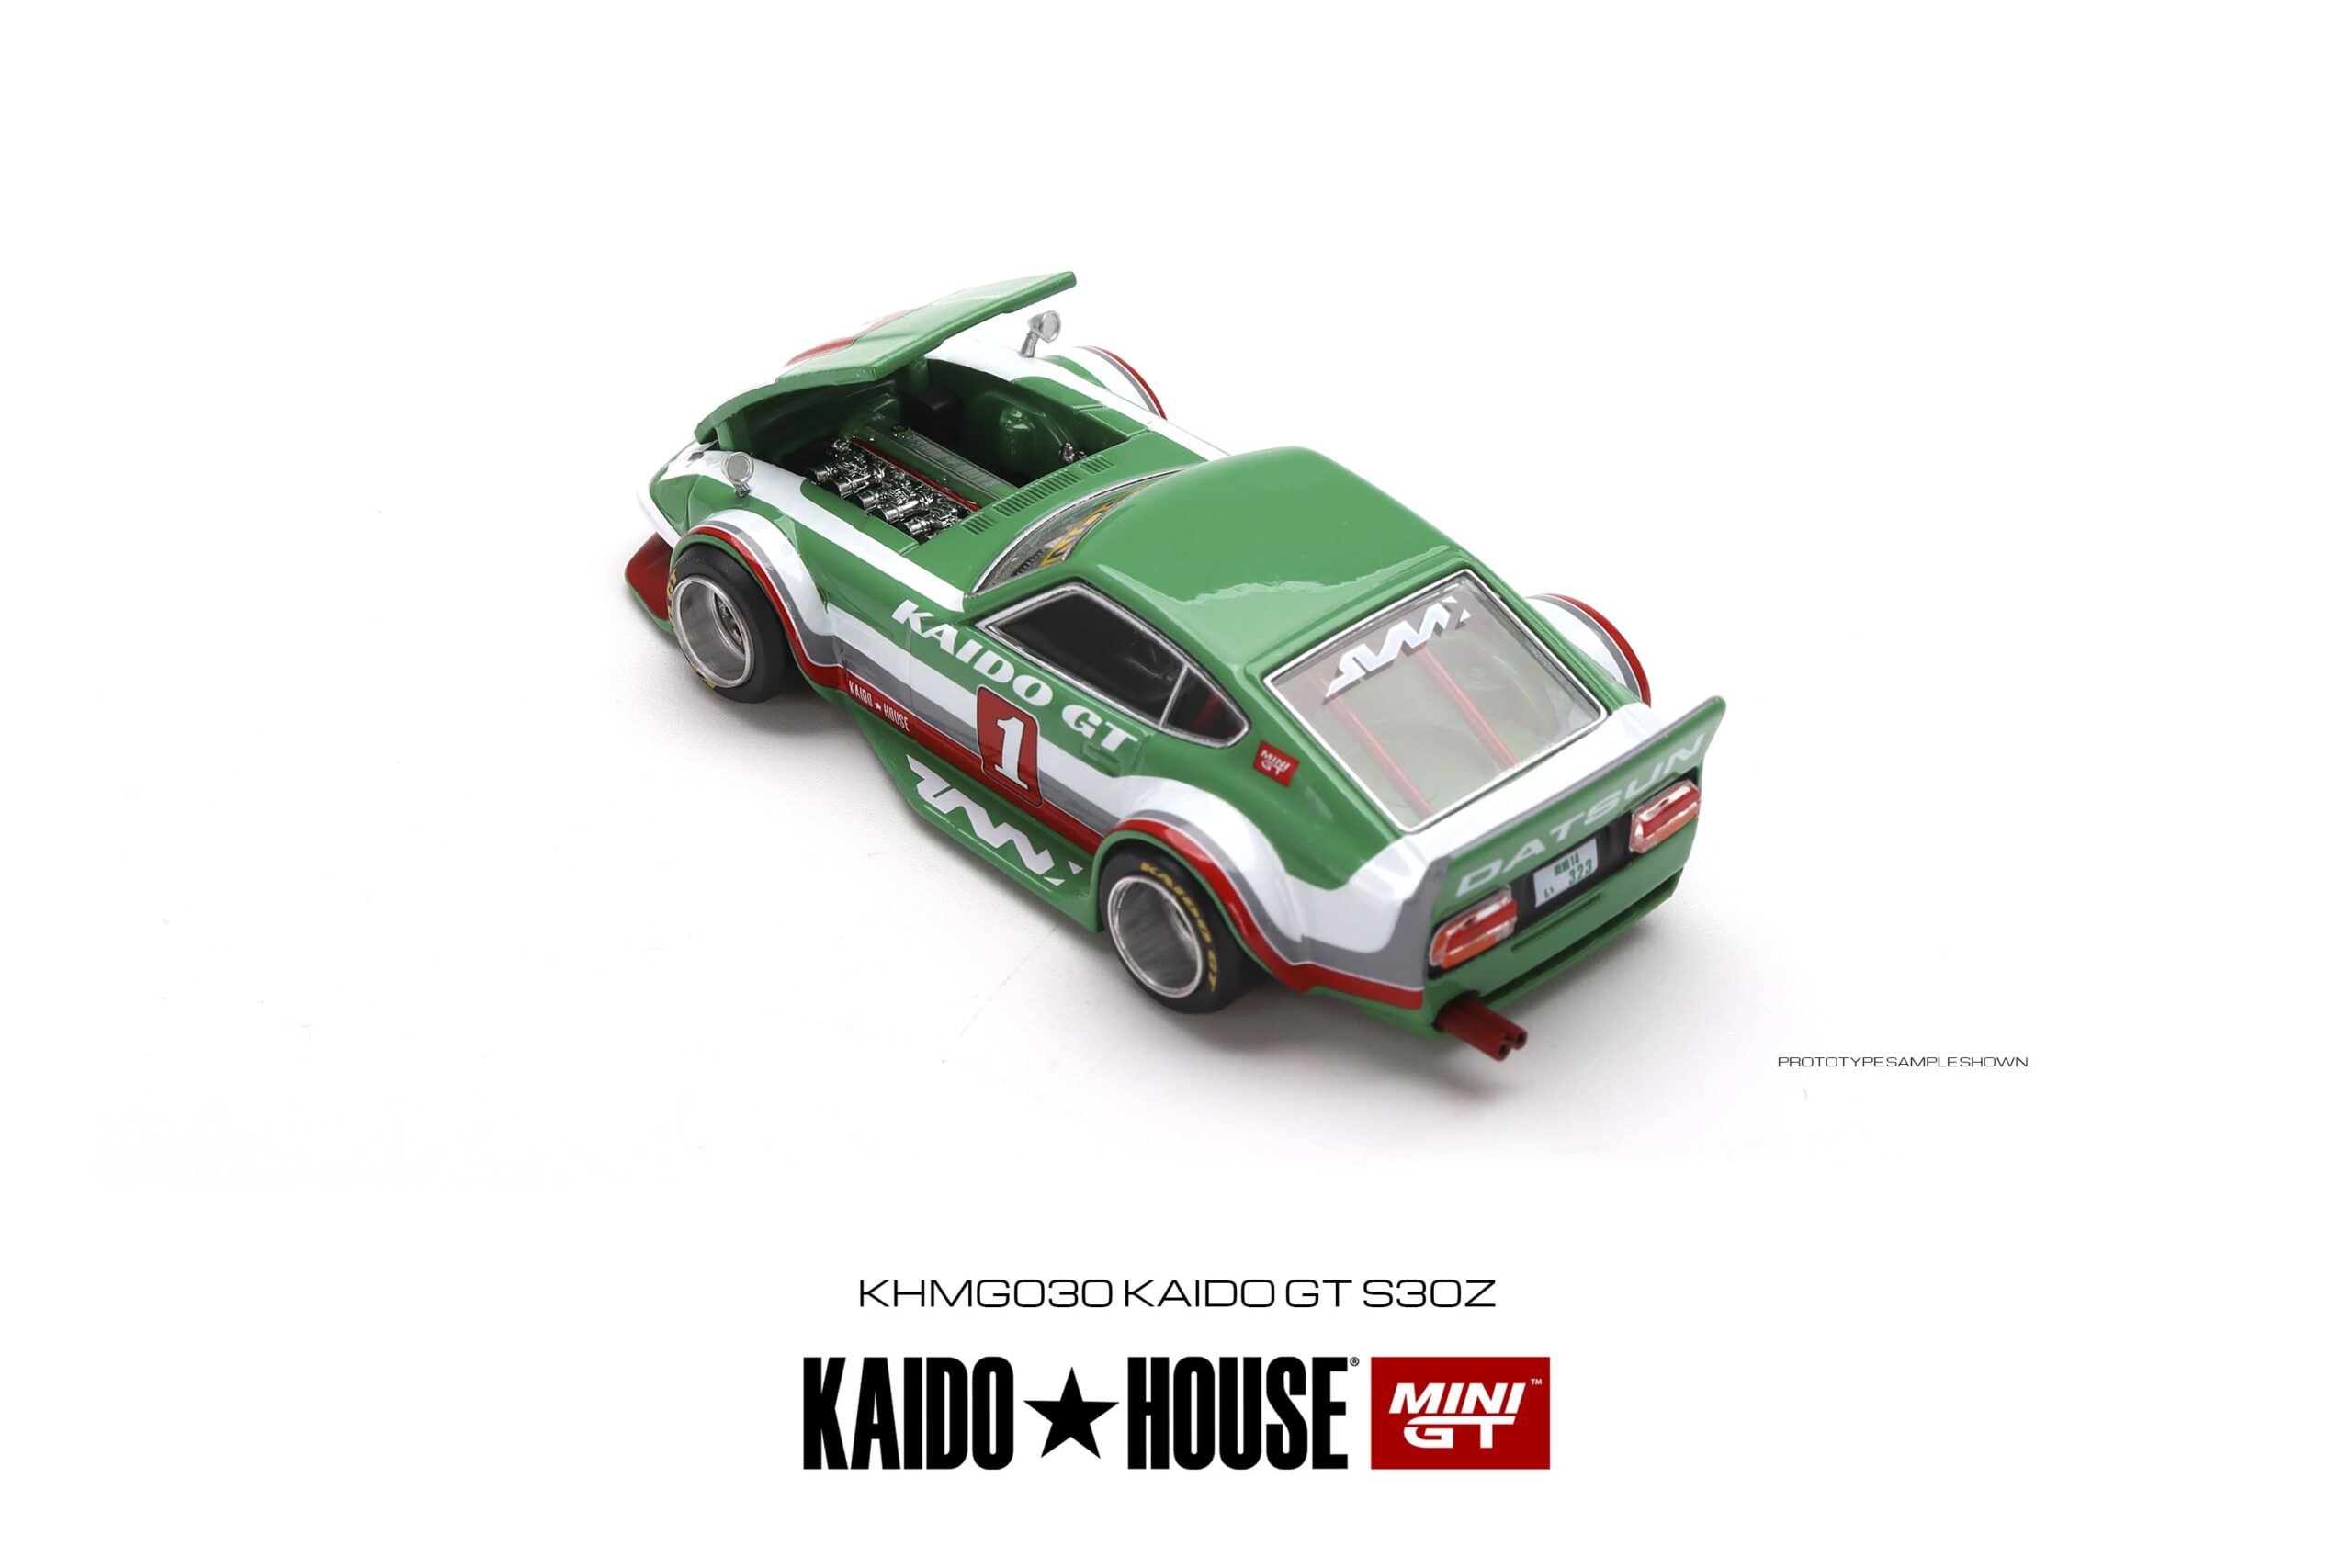 (Kaido house) Datsun Fairlady Z GT V2